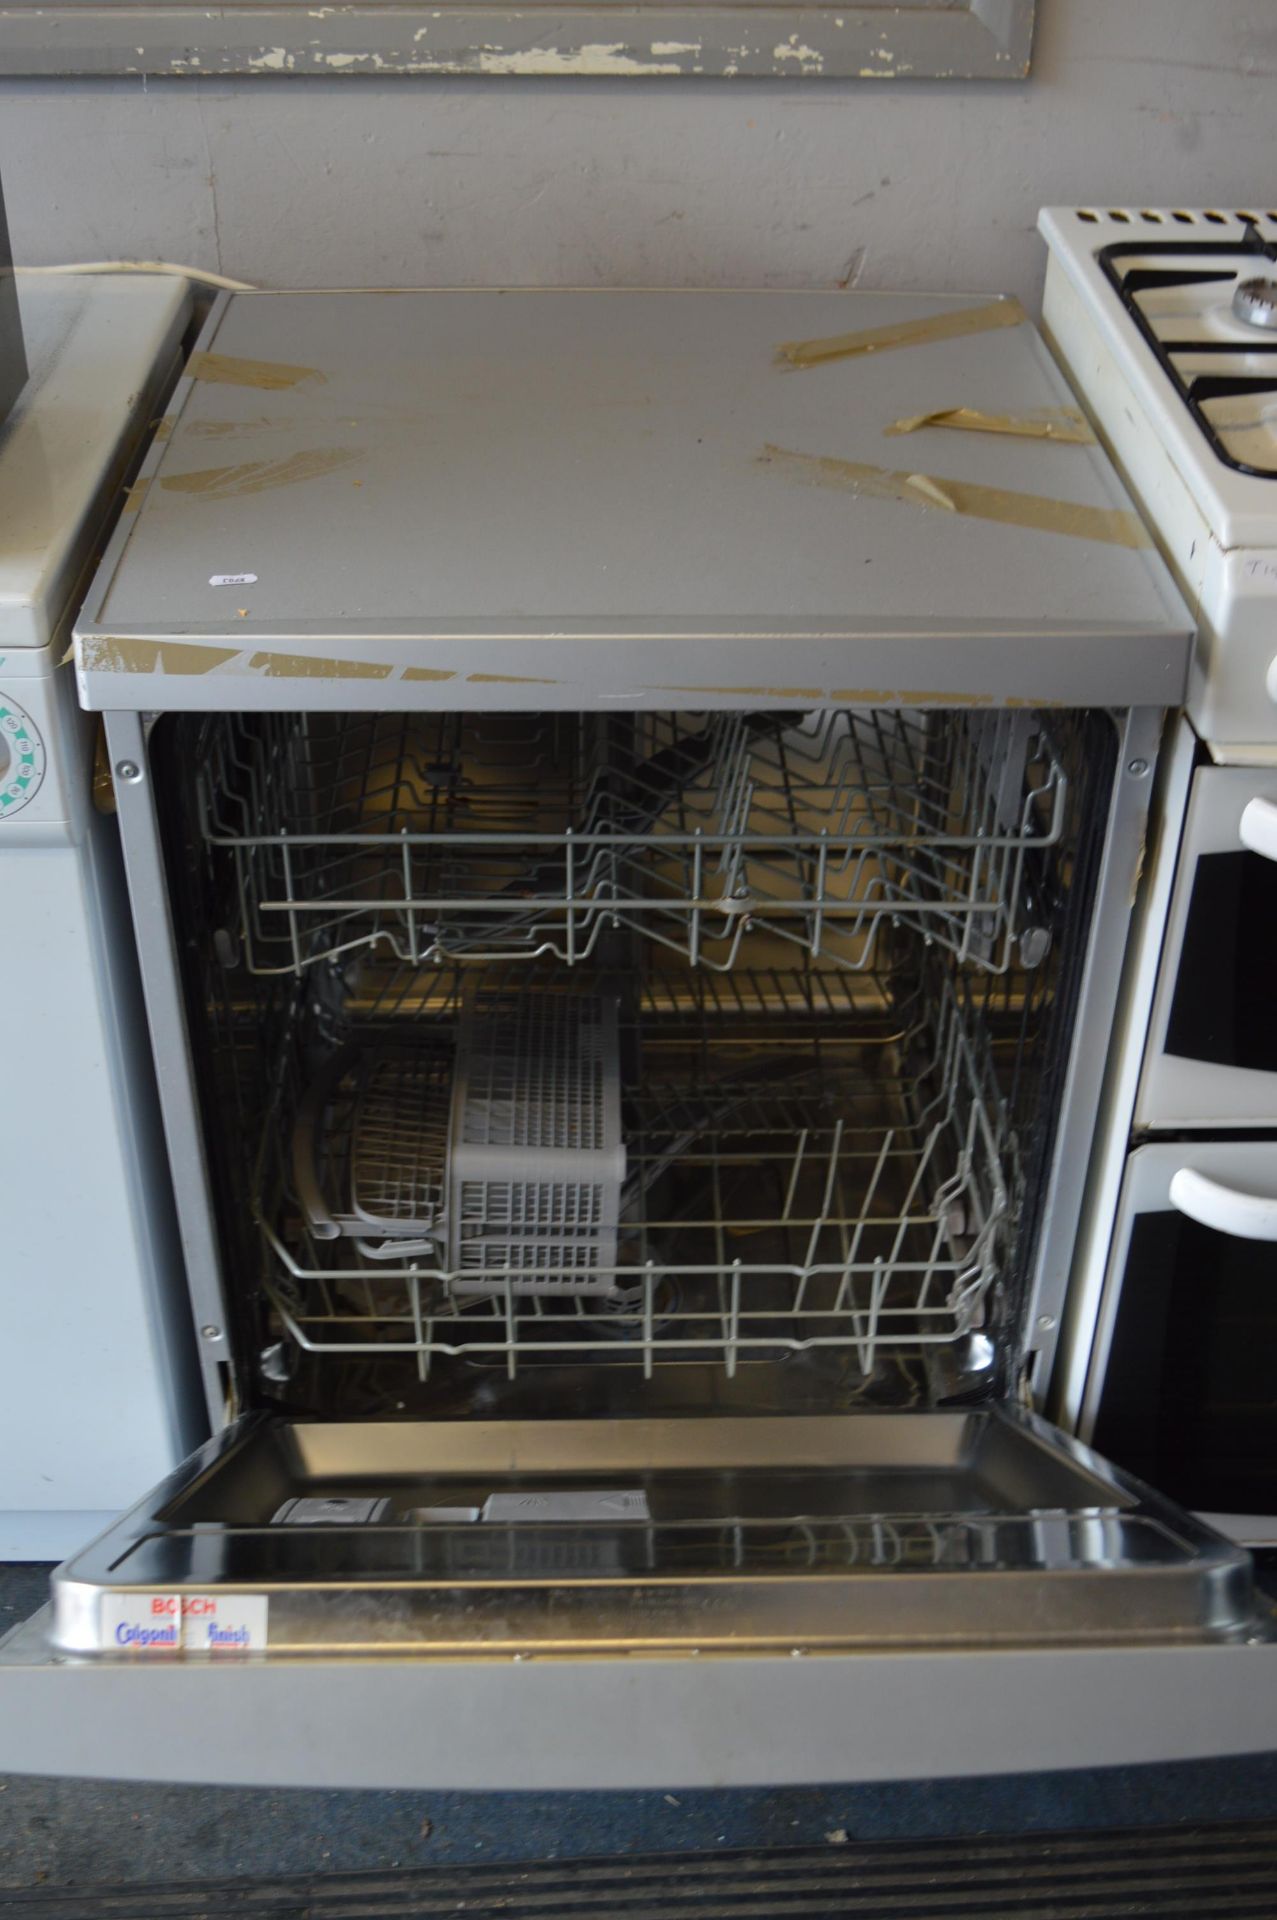 Bosch Exxcel Front Loading Dishwasher - Image 2 of 2